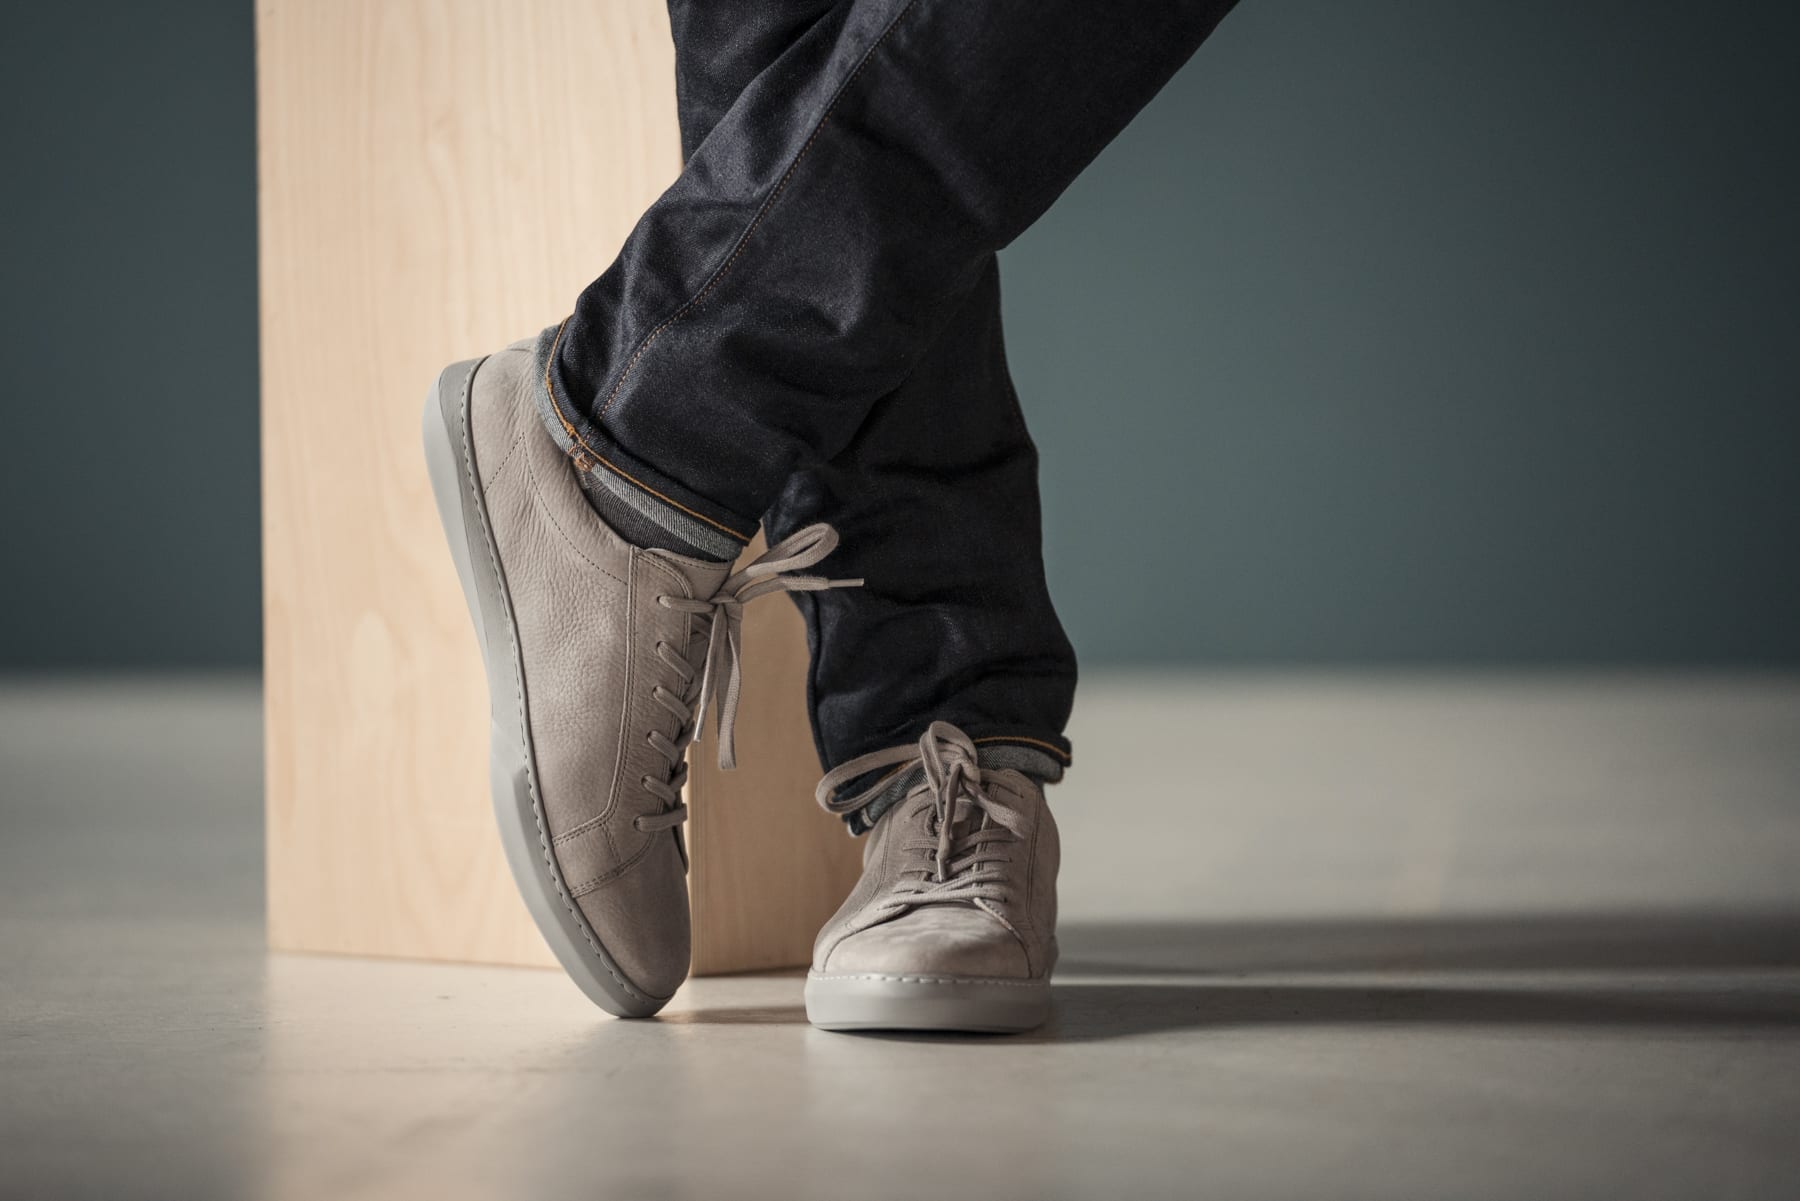 TVsæt Ved lov Søgemaskine markedsføring Can I Wear Sneakers with Business Casual? - Moral Code